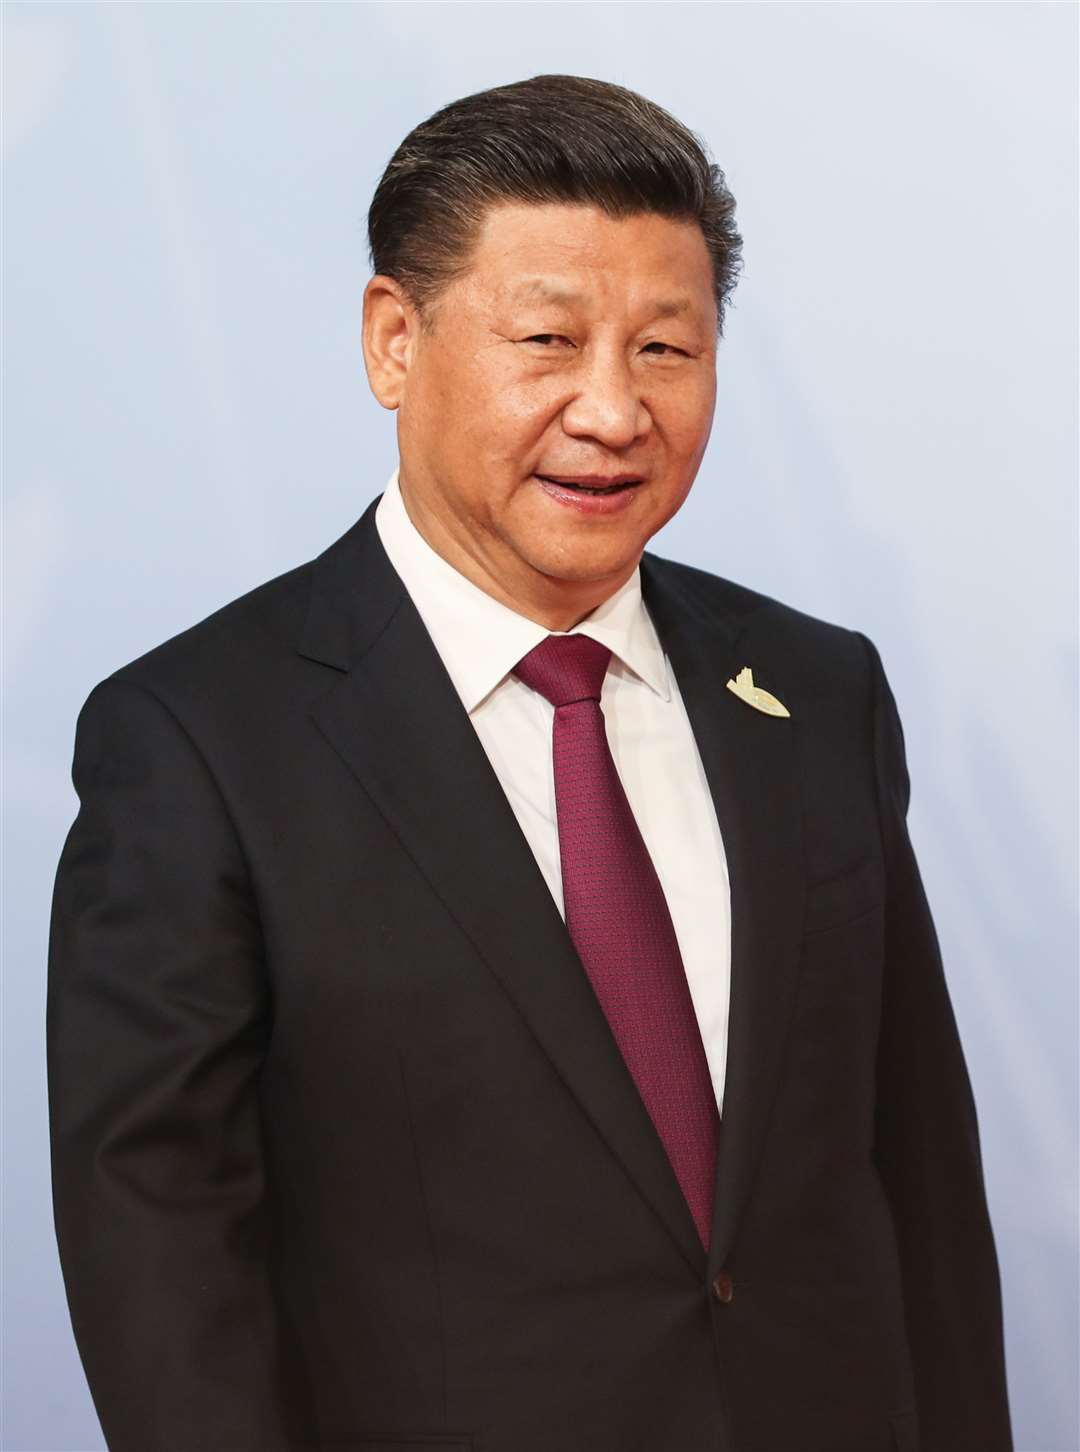 Chinese president Xi Jinping (Matt Cardy/PA)